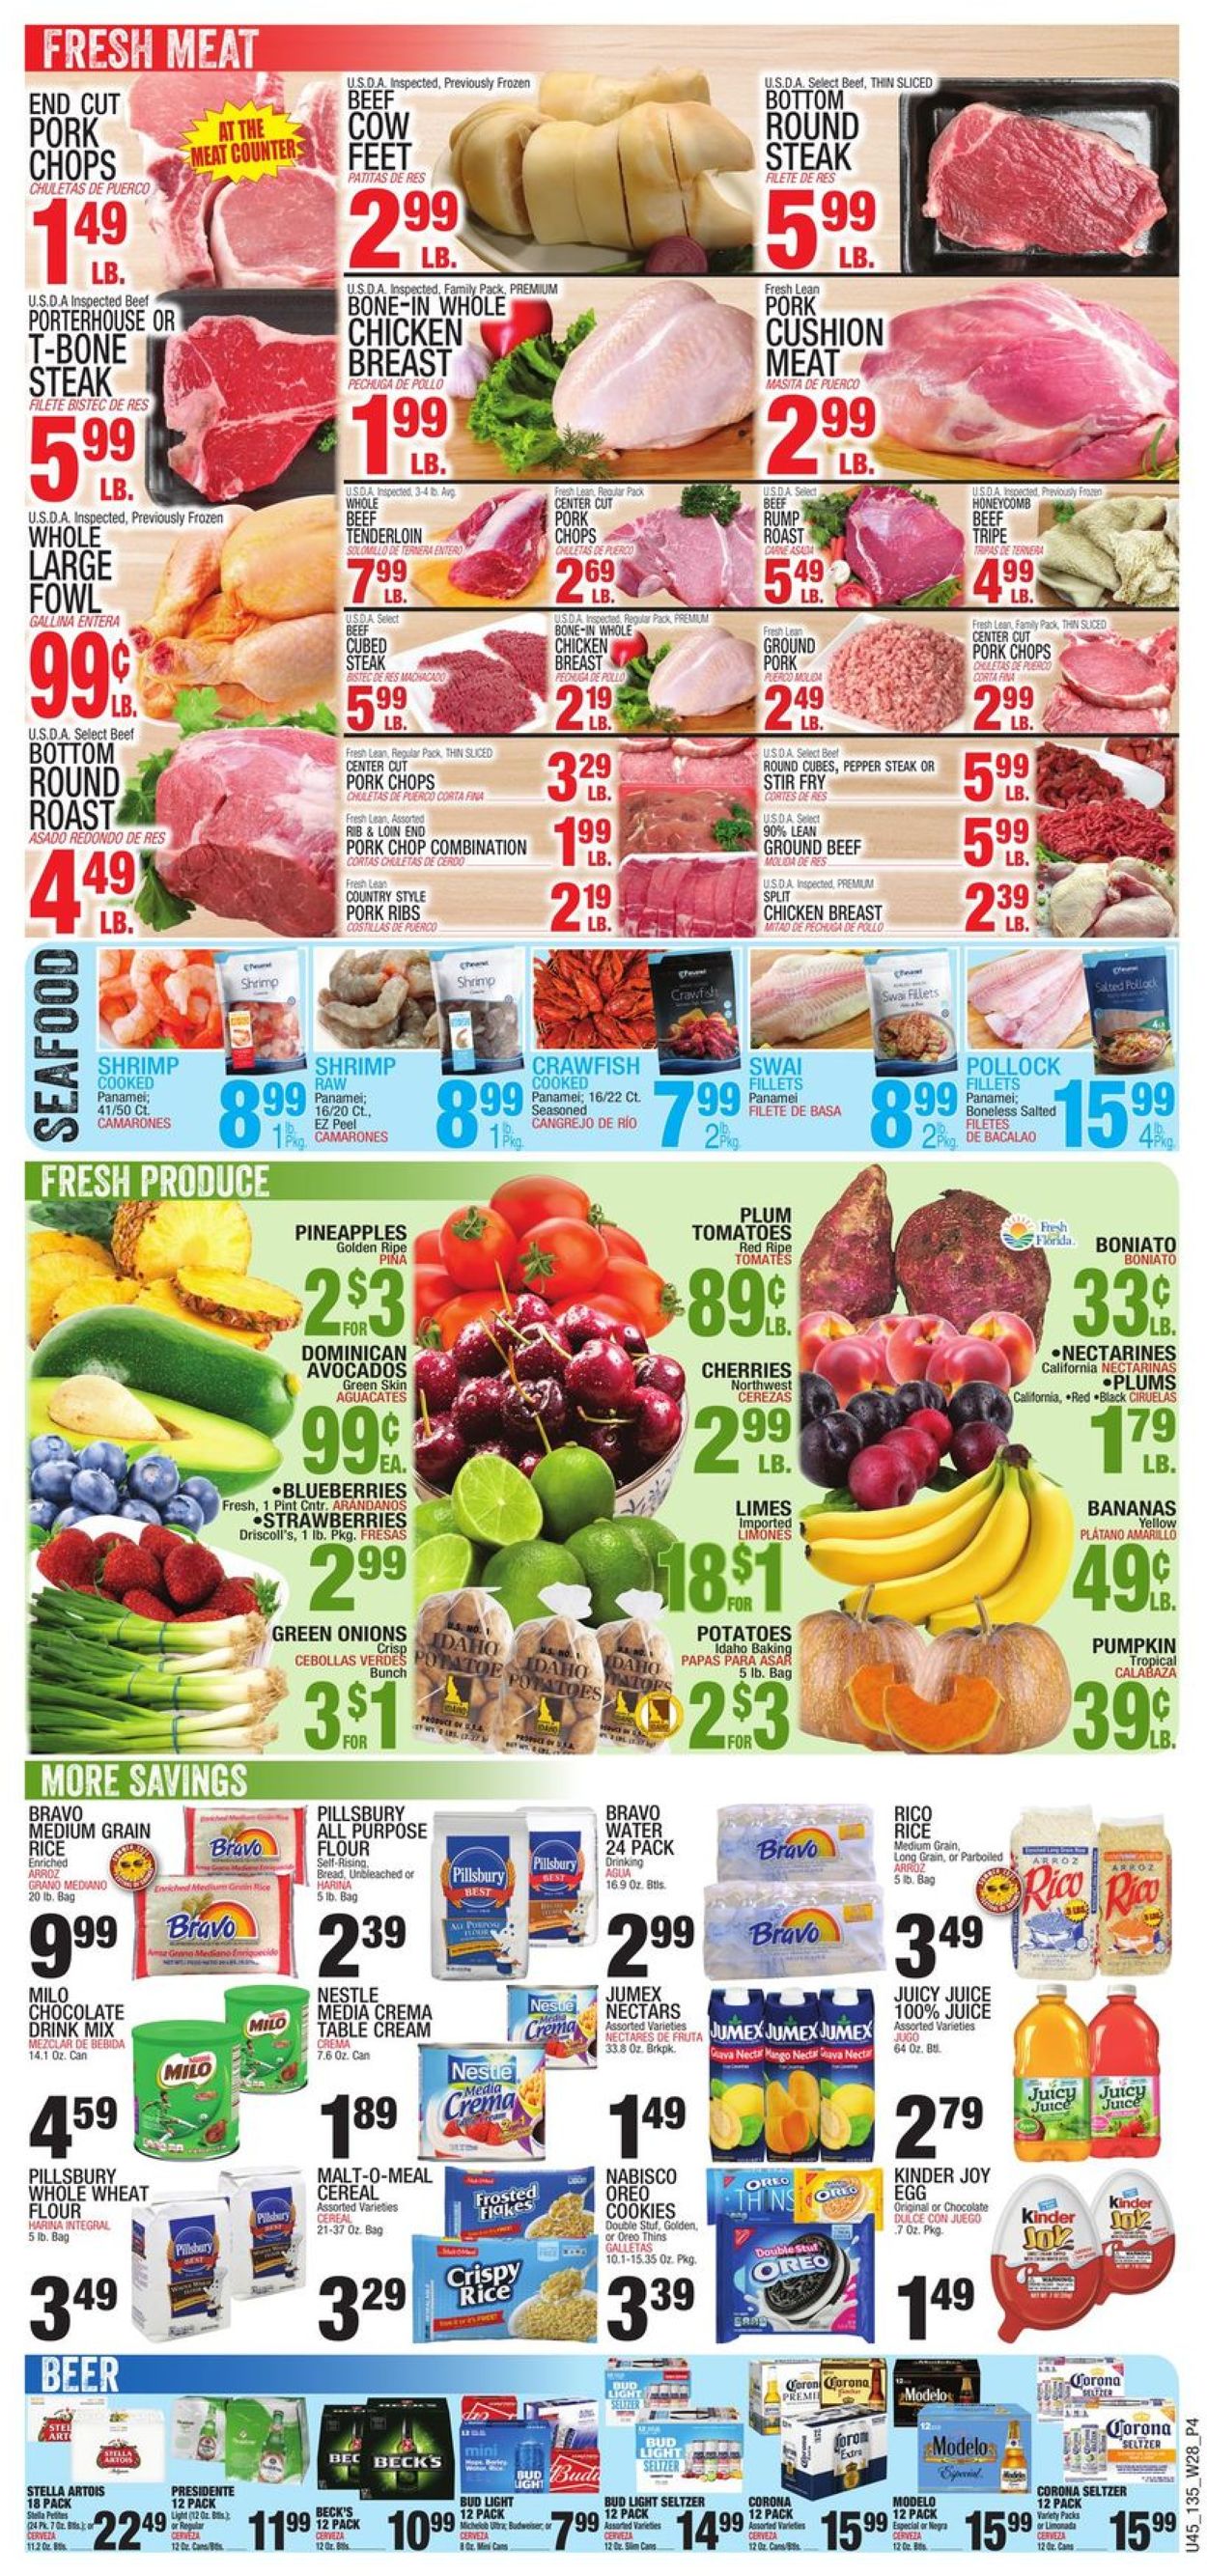 Catalogue Bravo Supermarkets from 07/08/2021